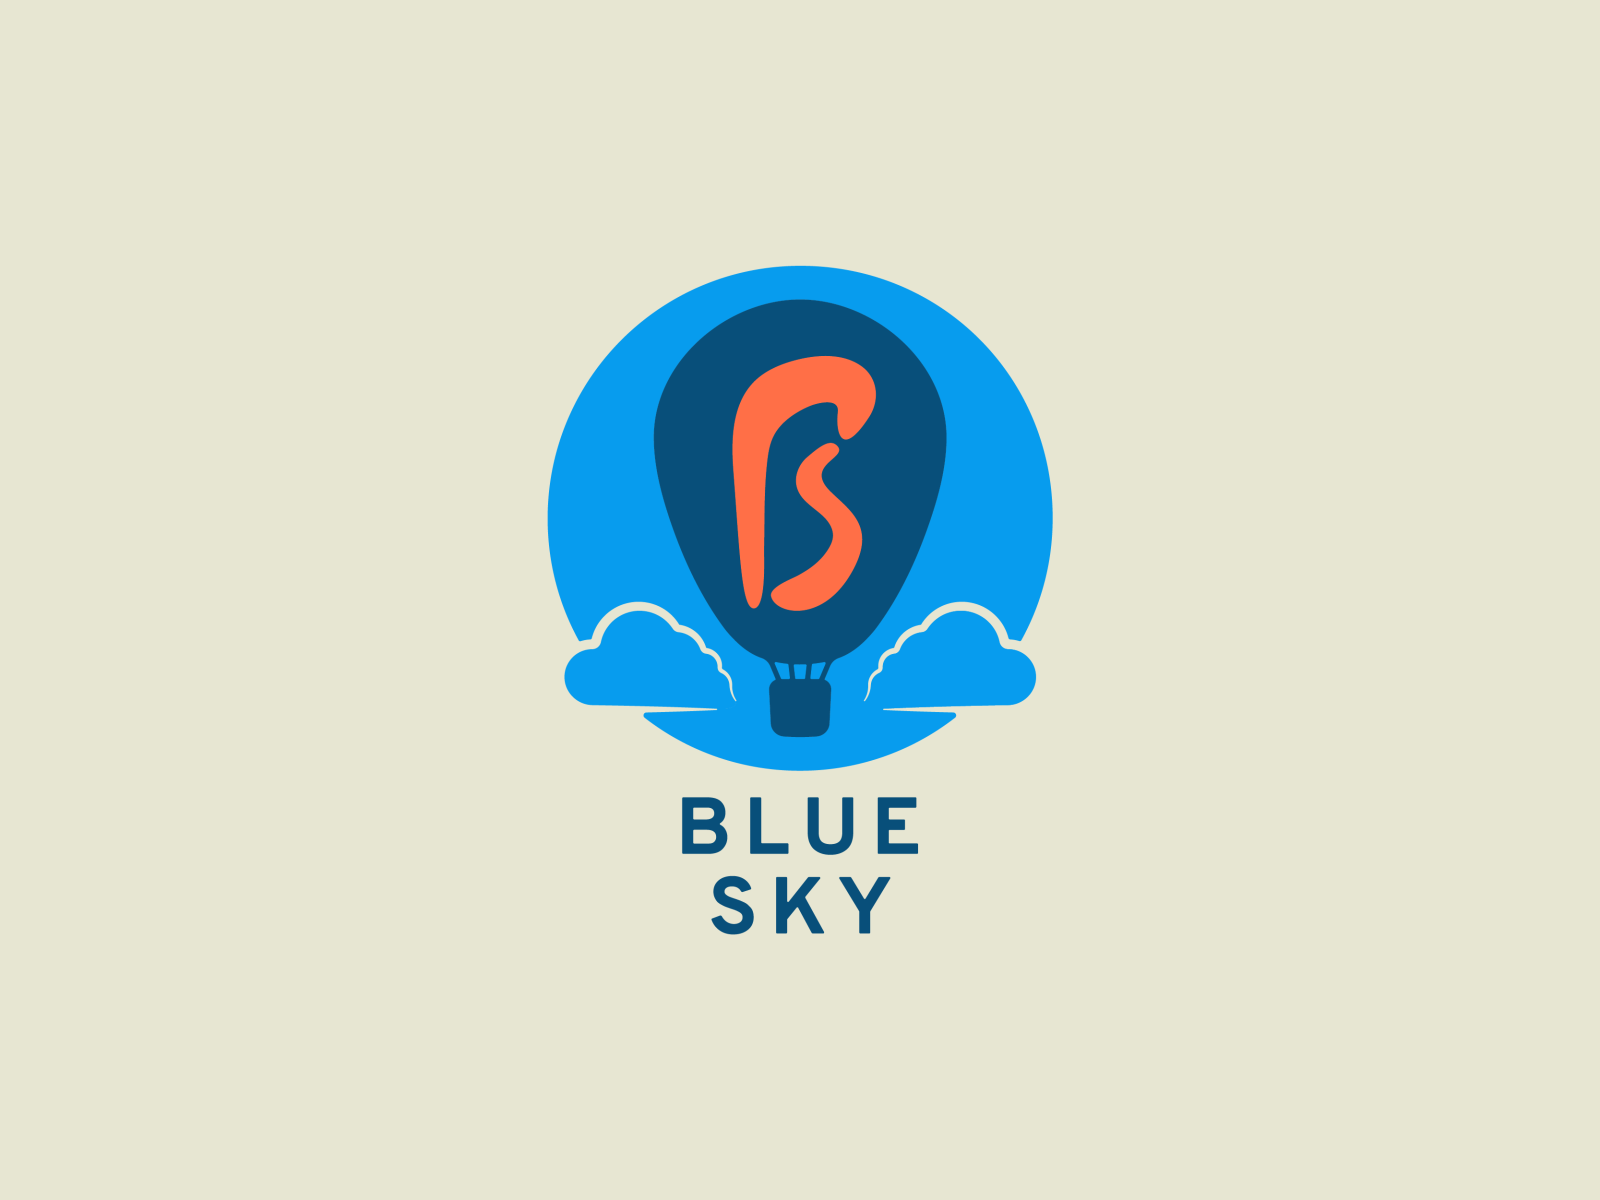 Blue Sky Studios logo (2013-present) - YouTube